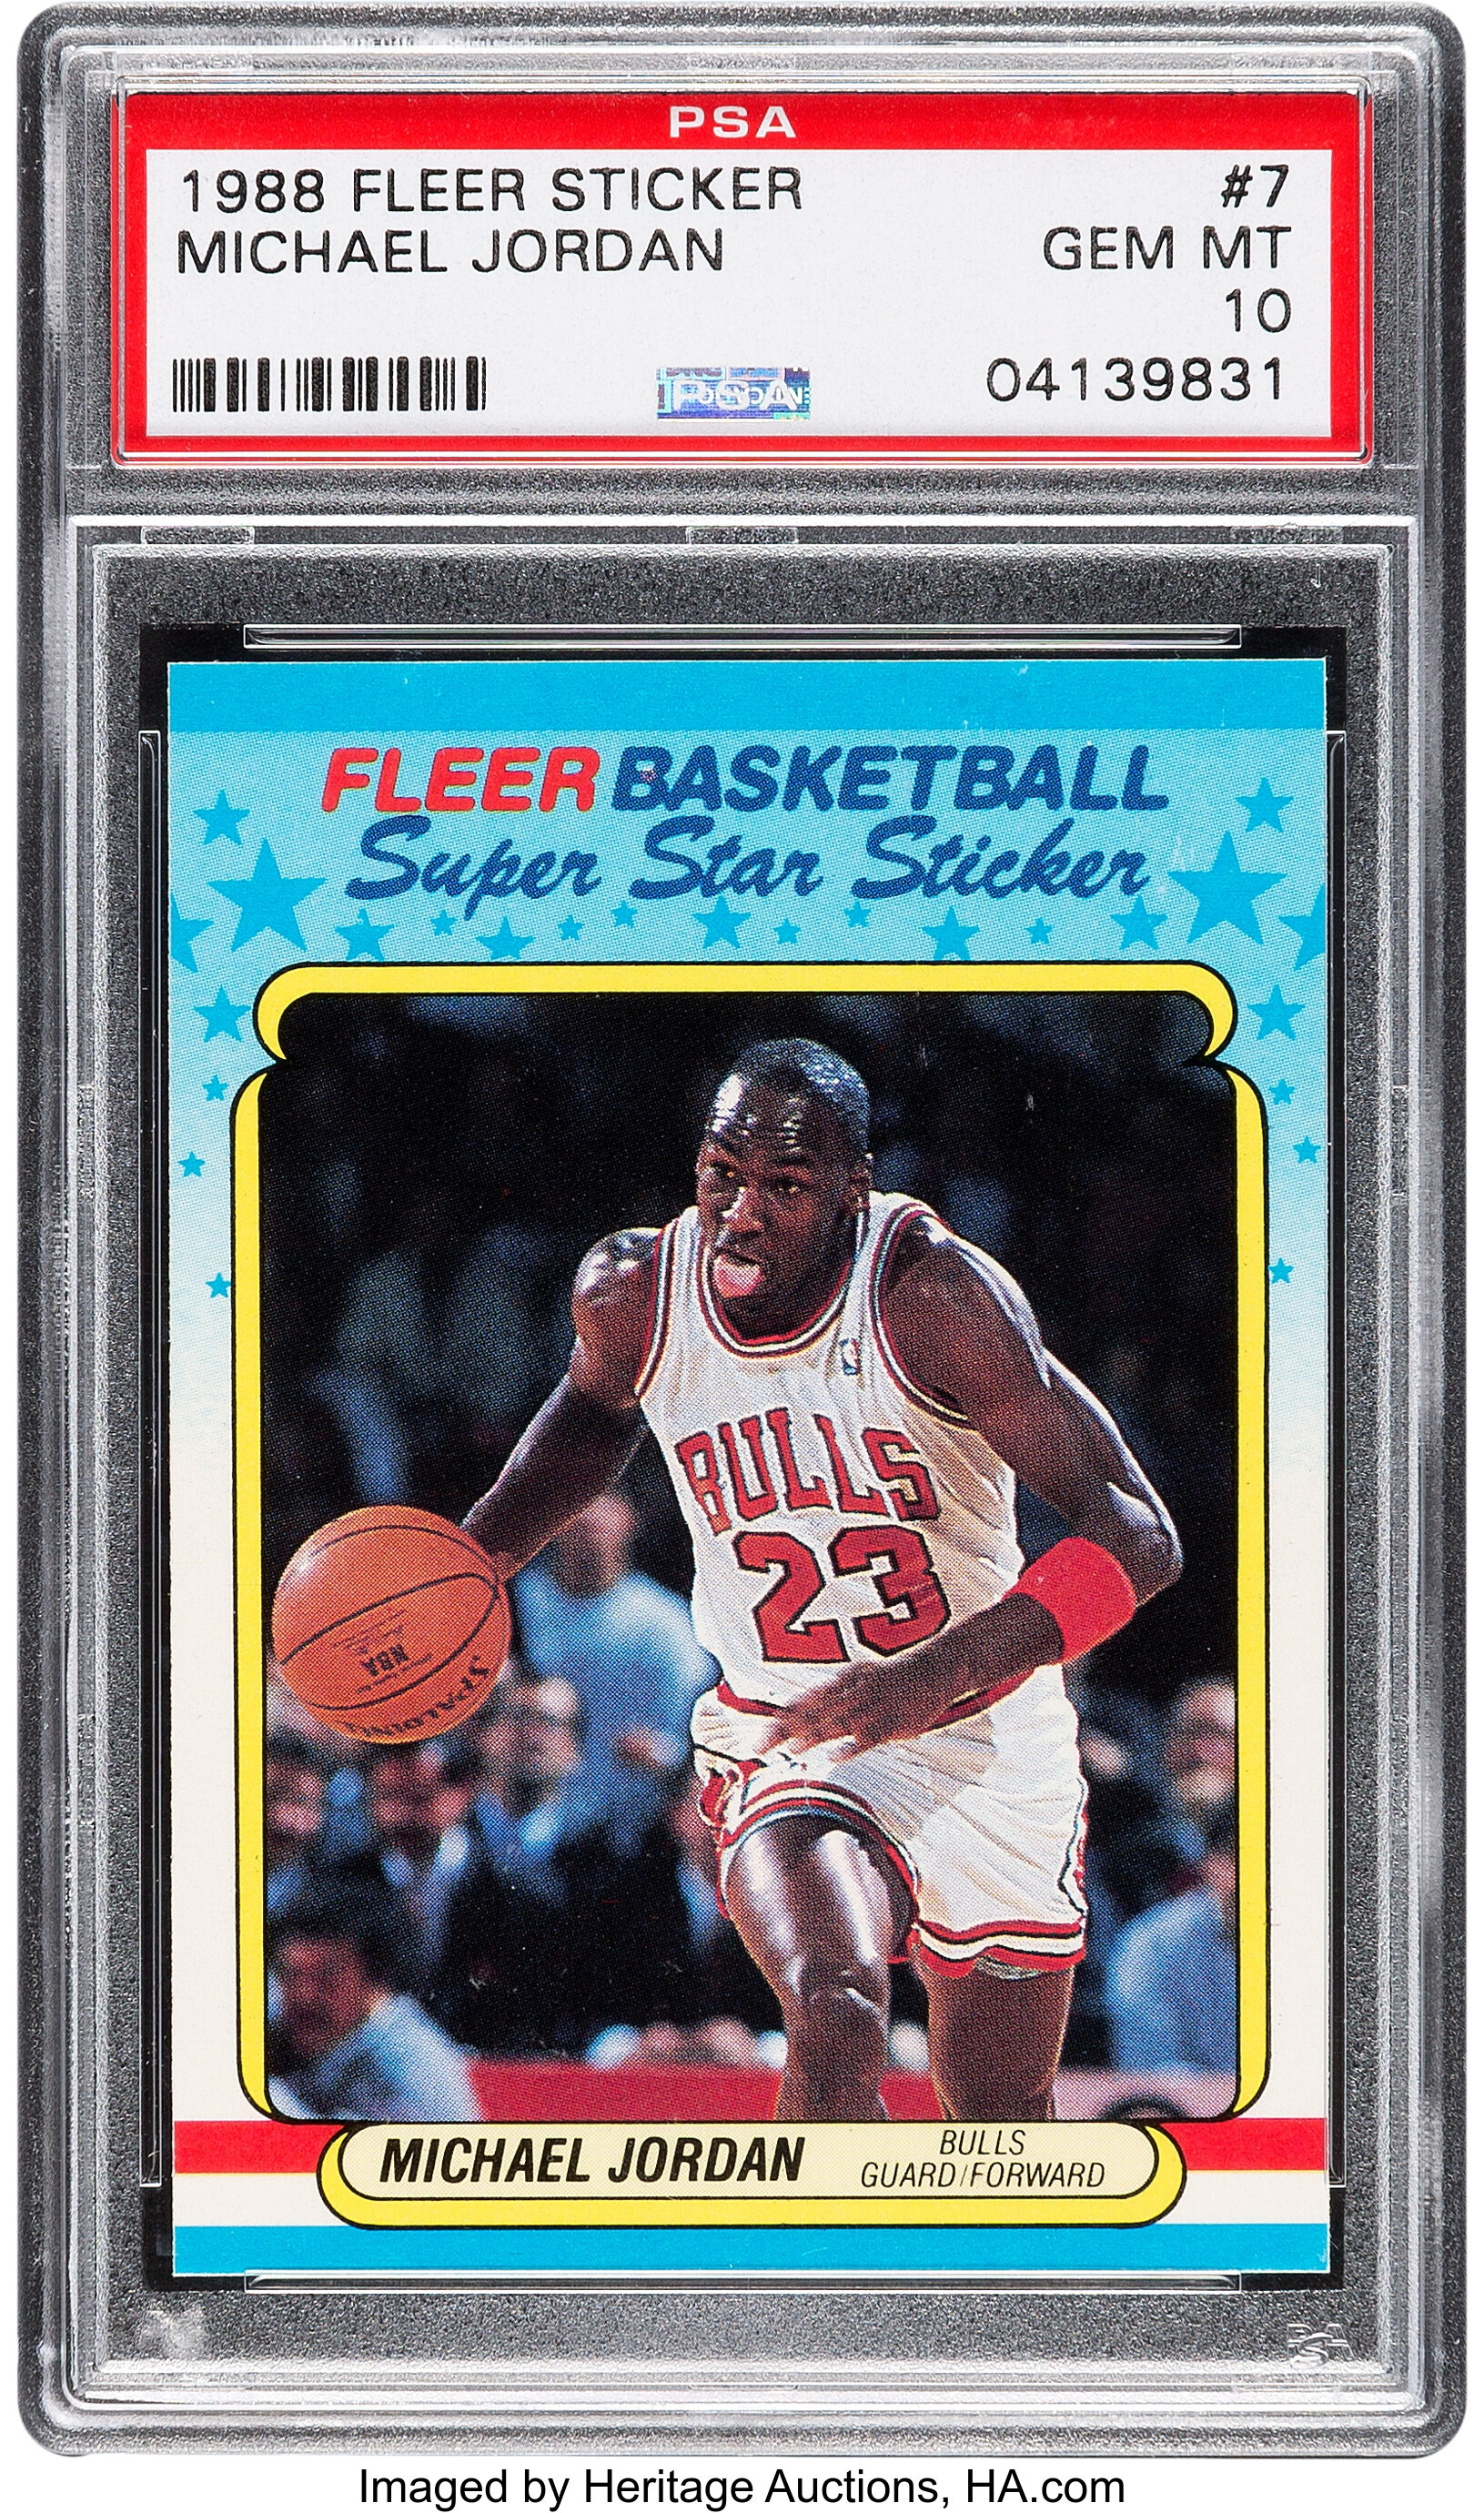 1988 Fleer Sticker Michael Jordan #7 PSA Gem Mint 10